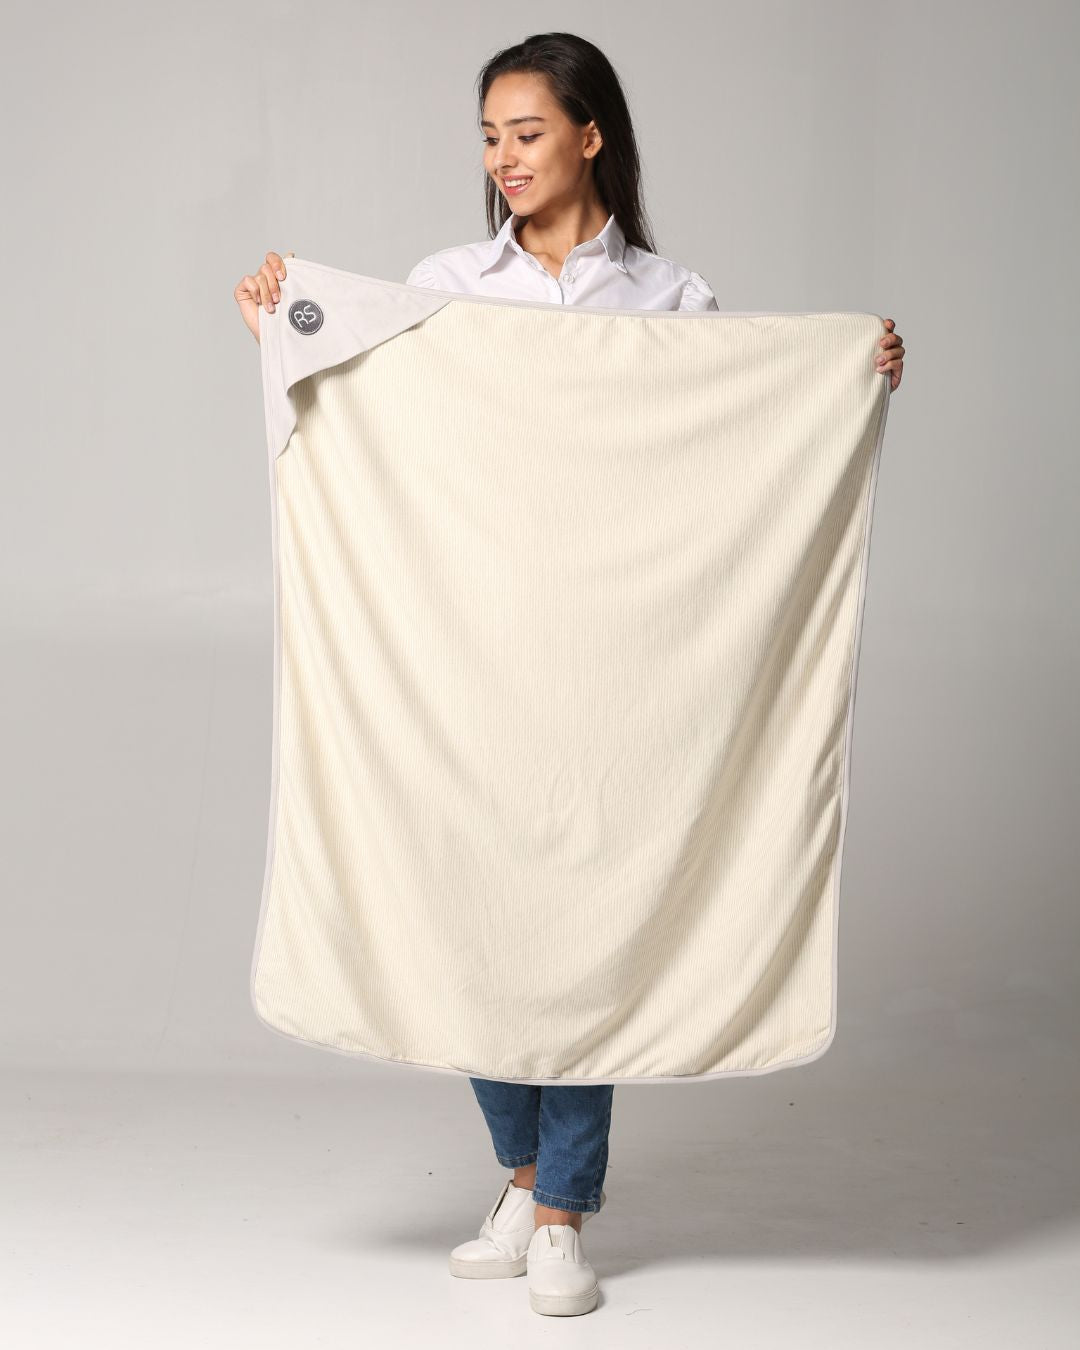 Silver Wrap Blanket EMF Protection Blanket – GROUNDITUDE